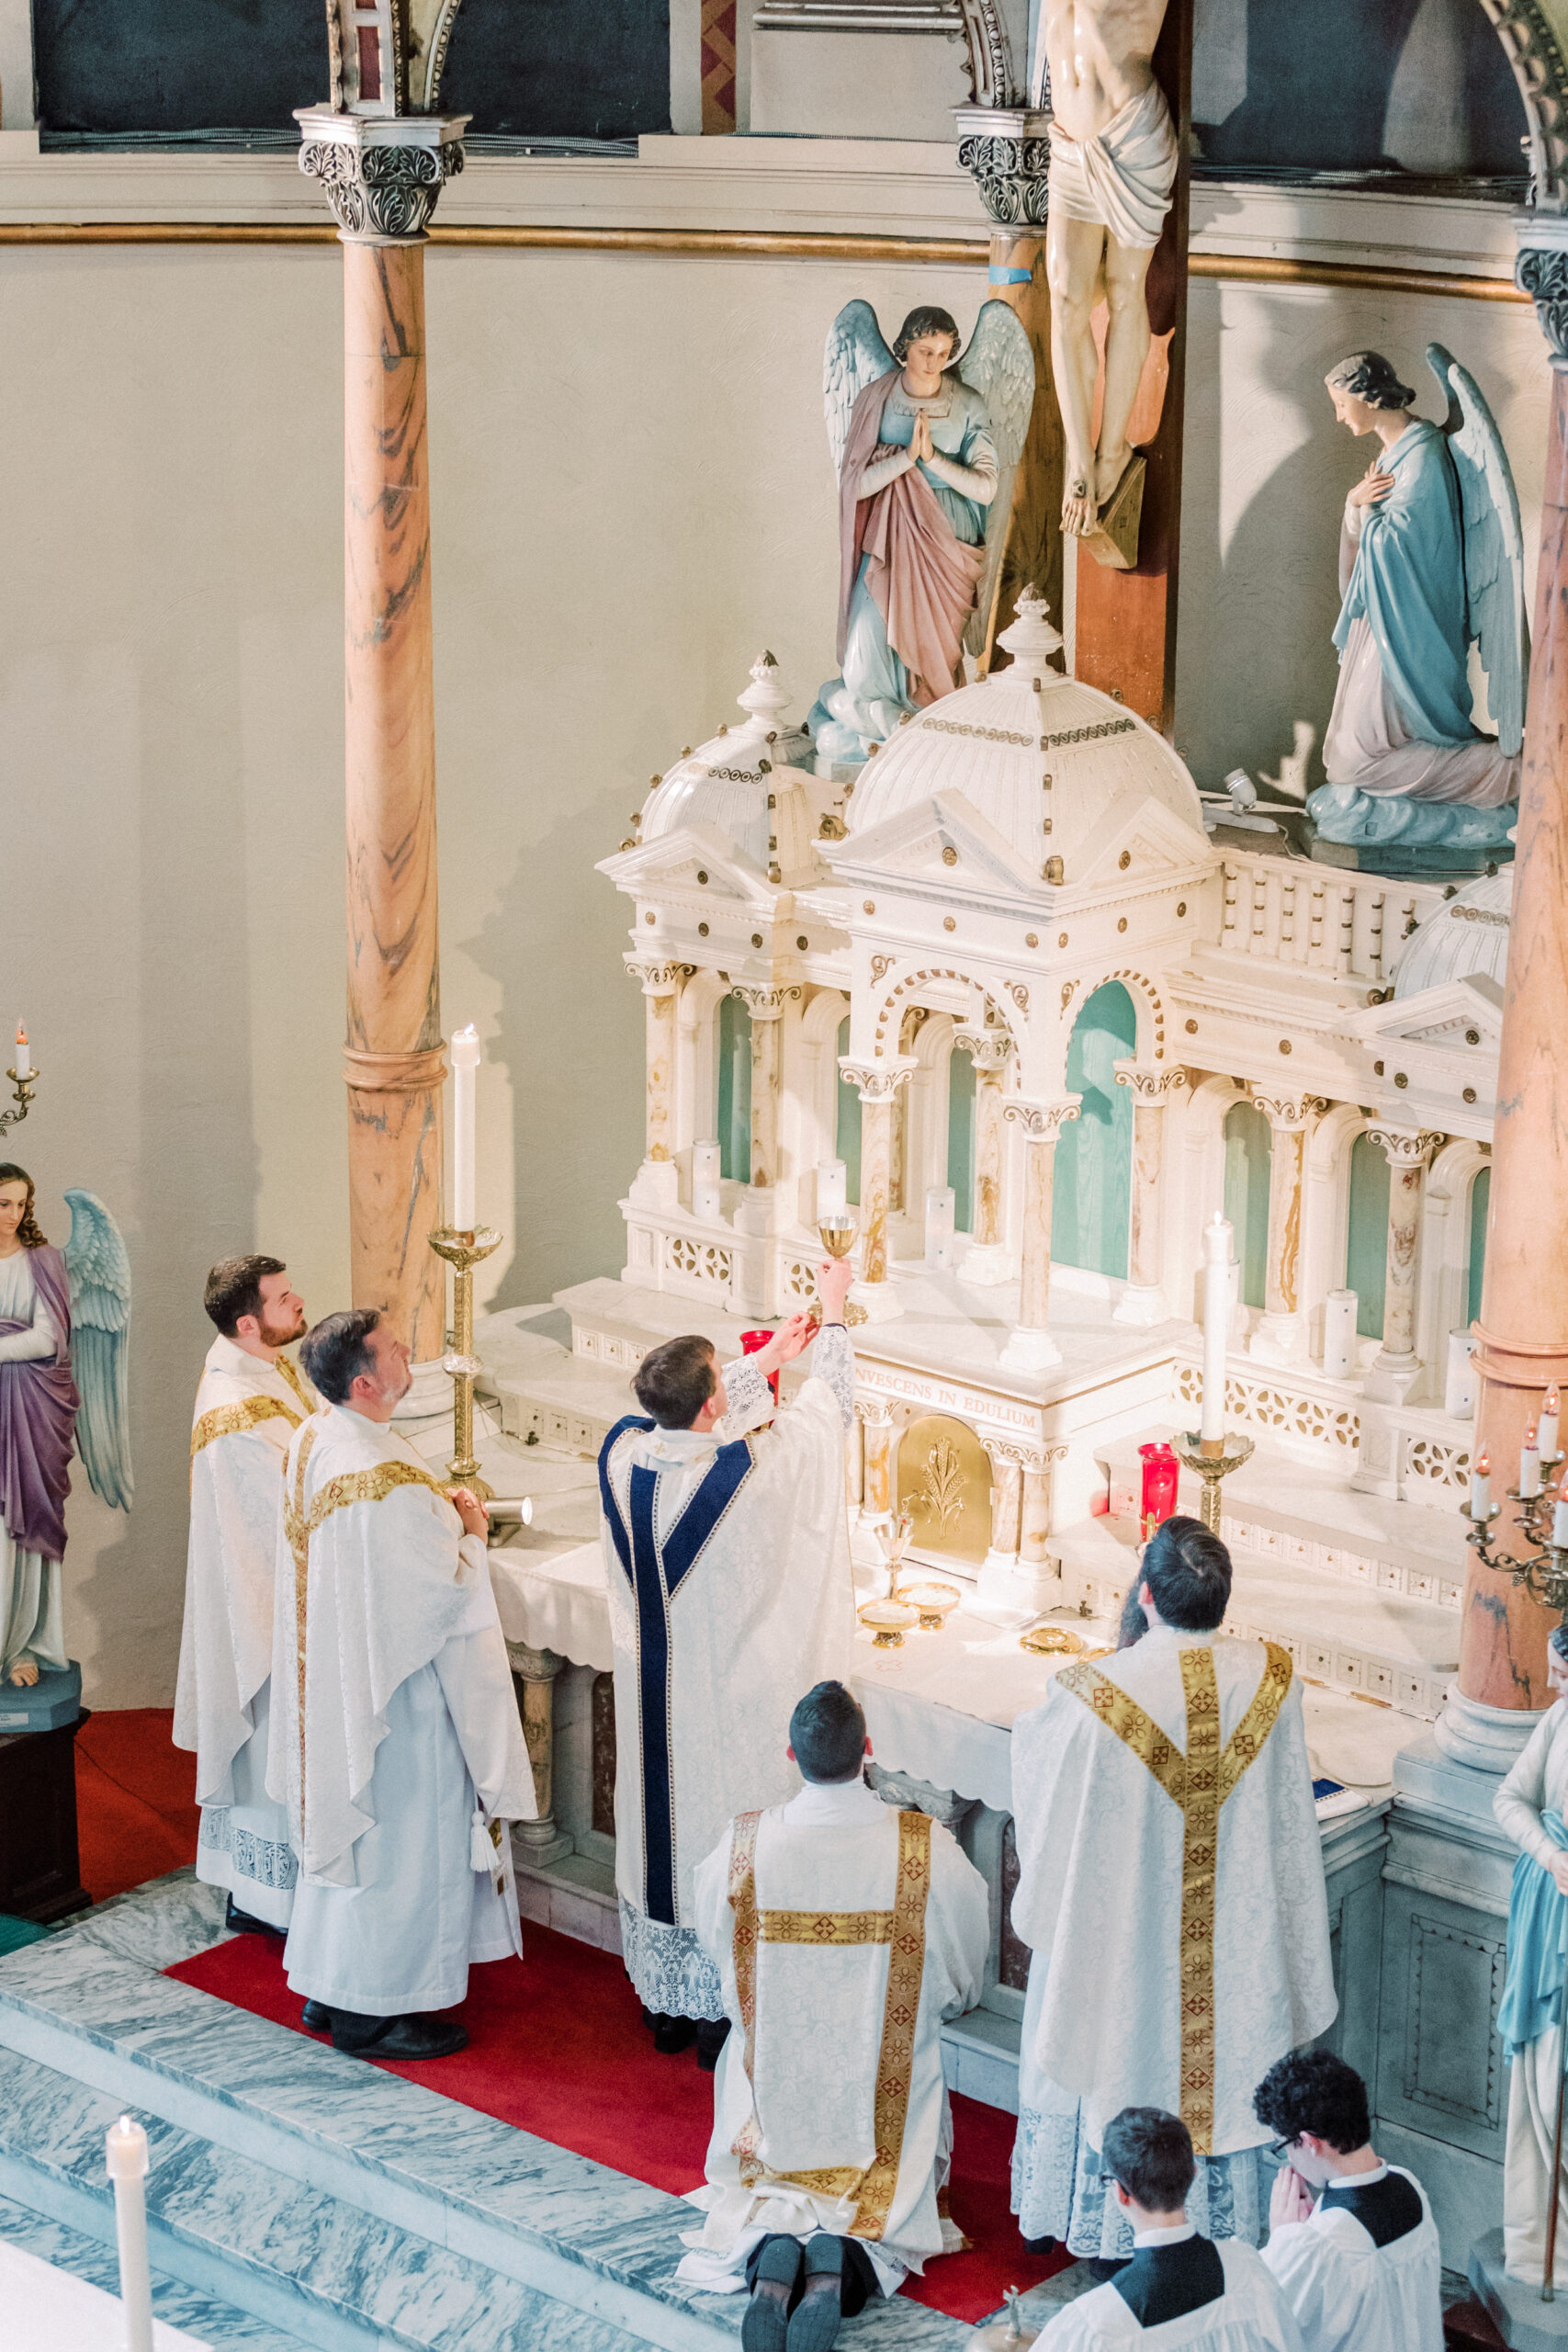 The altar at St. Stanislaus Kostka Catholic Church Pittsburg